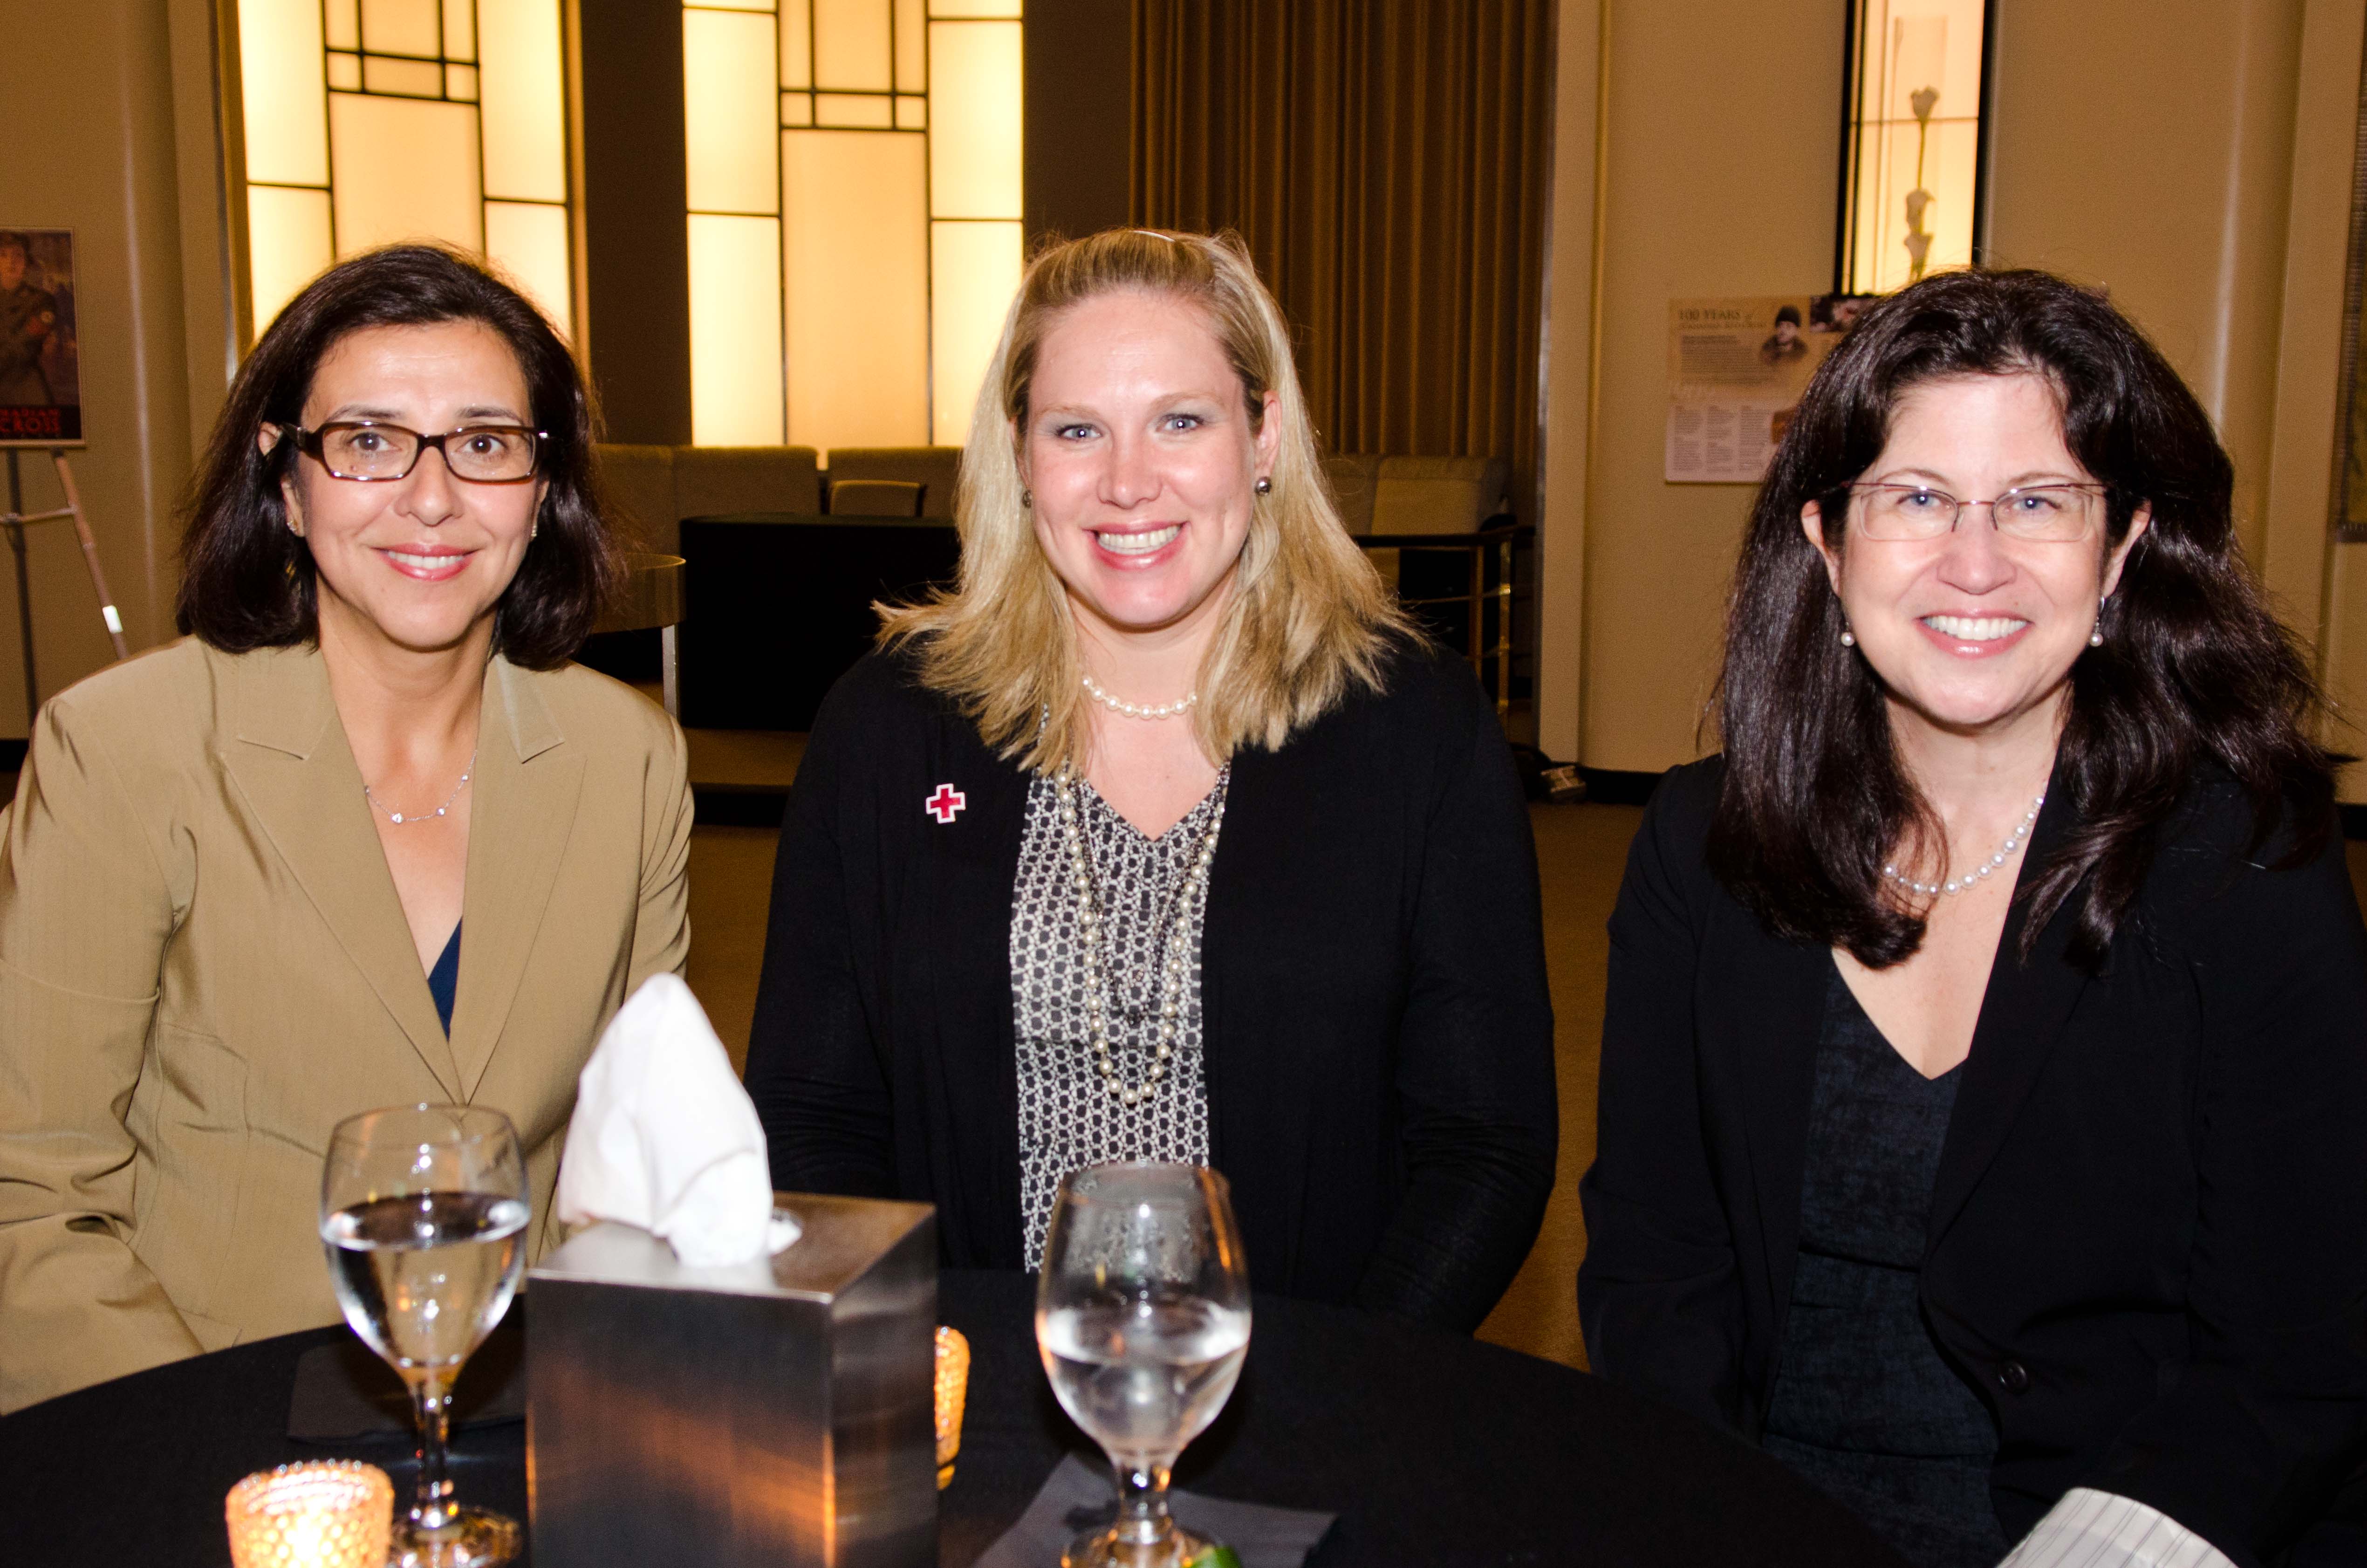 Left to right: Sonia Baxendale (former CIBC senior executive vice-president), Juliana Sprott (Sprott Foundation), Fern Gordon (Profit Line co-founder)